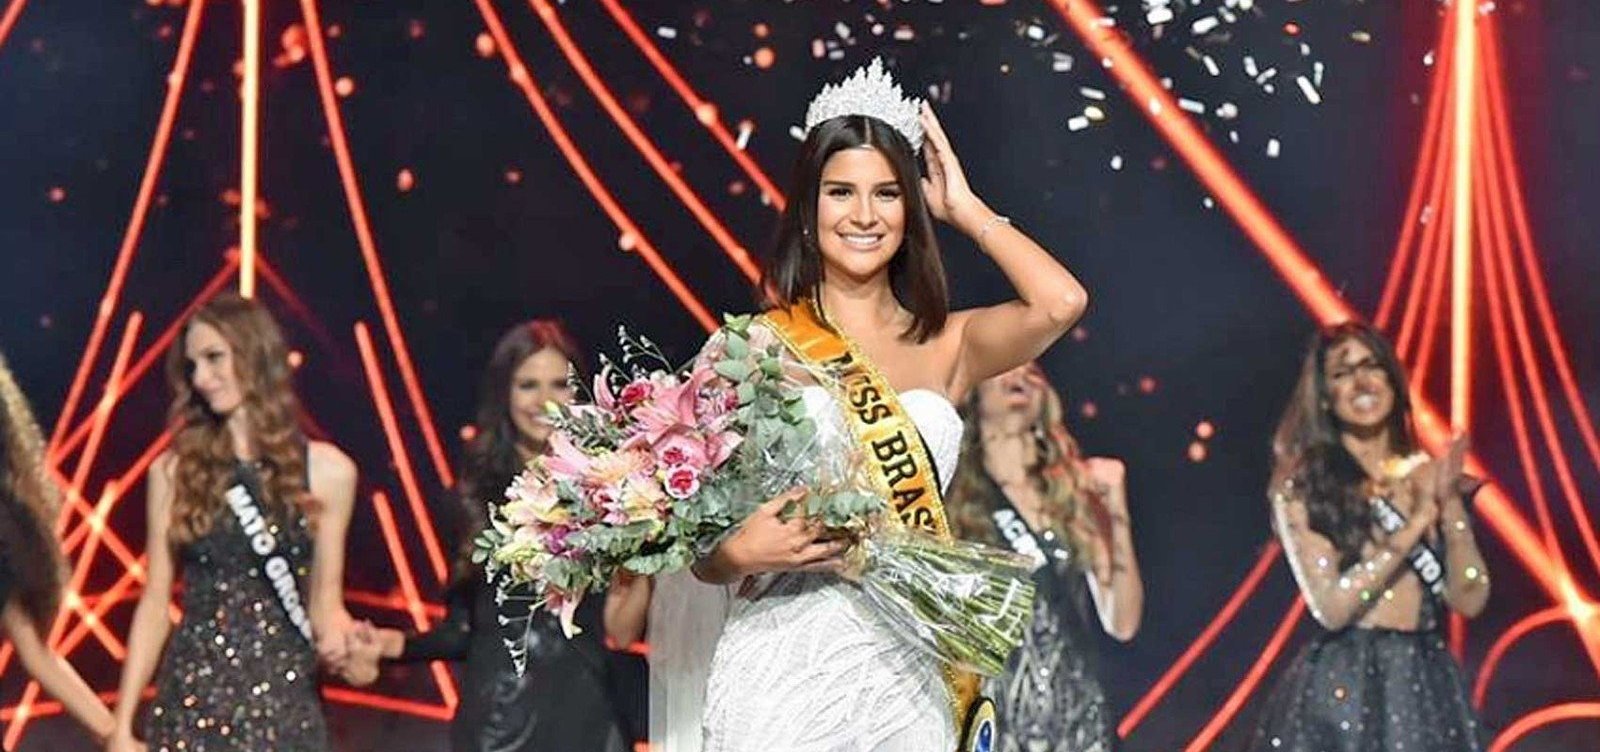 Jornalista mineira é eleita Miss Brasil 2019